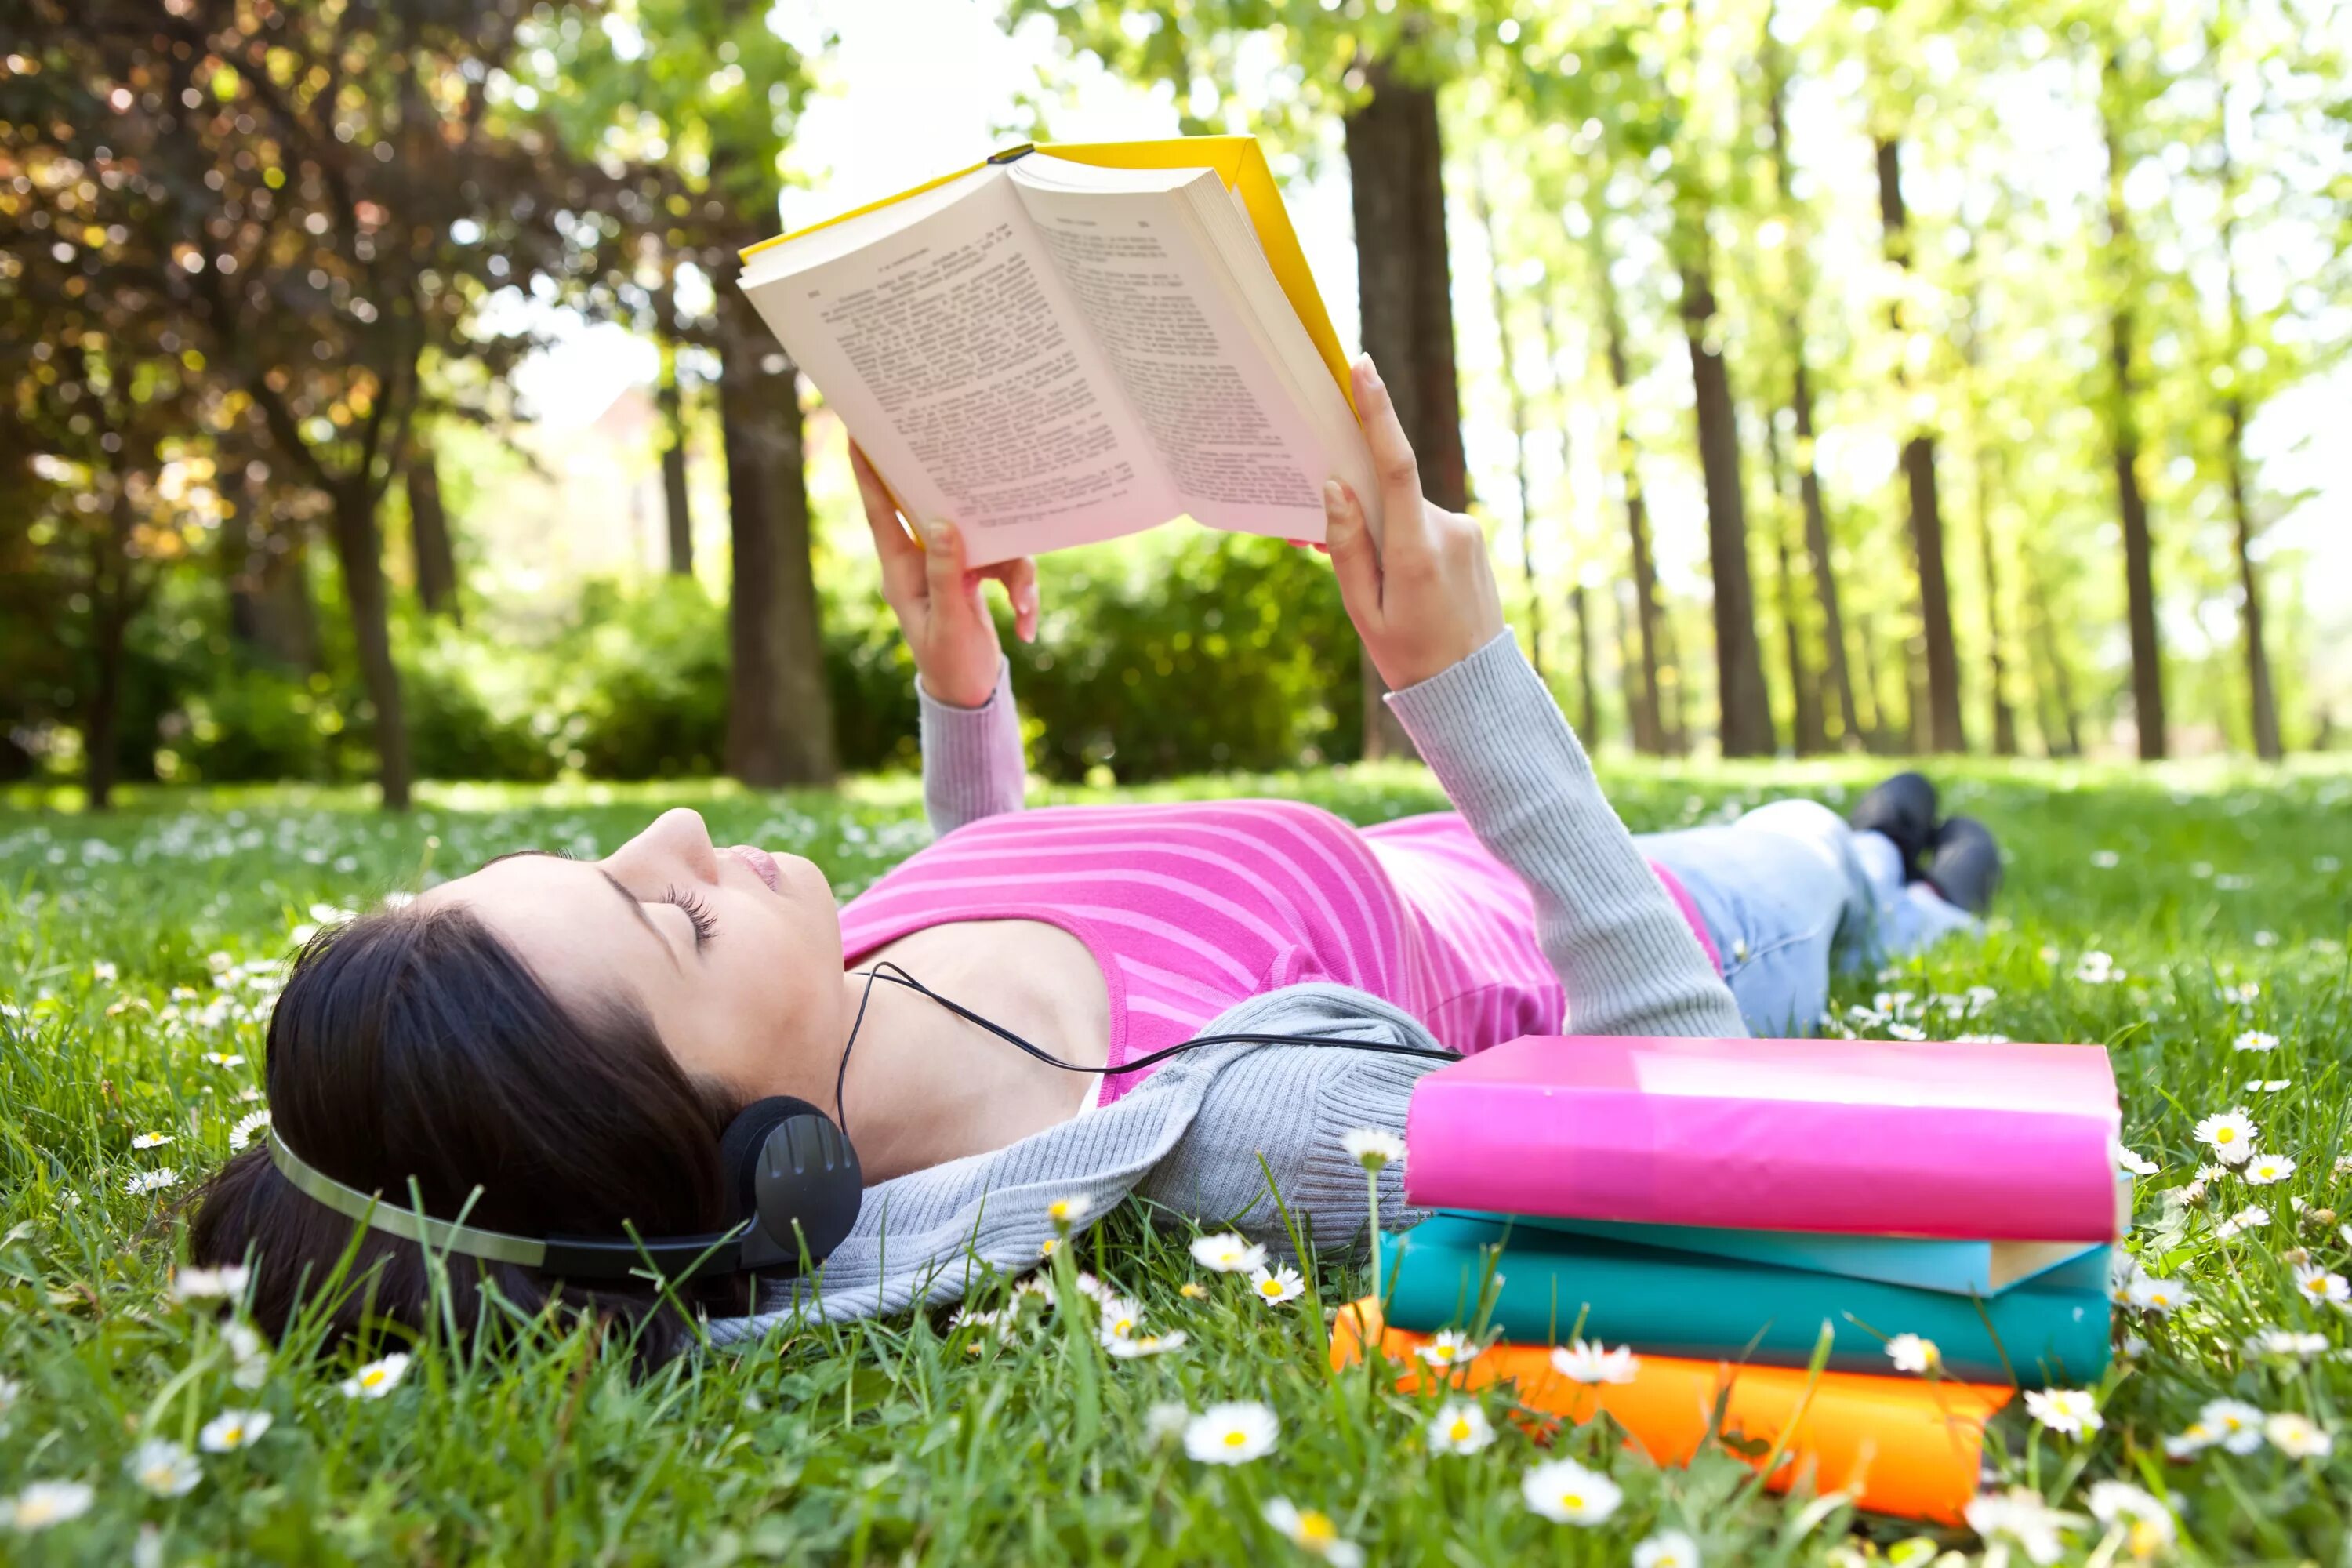 Knigi read book. Фотосессия с книгой на природе. Девушка с книжкой в парке. Книга человек. Лето книги чтение.